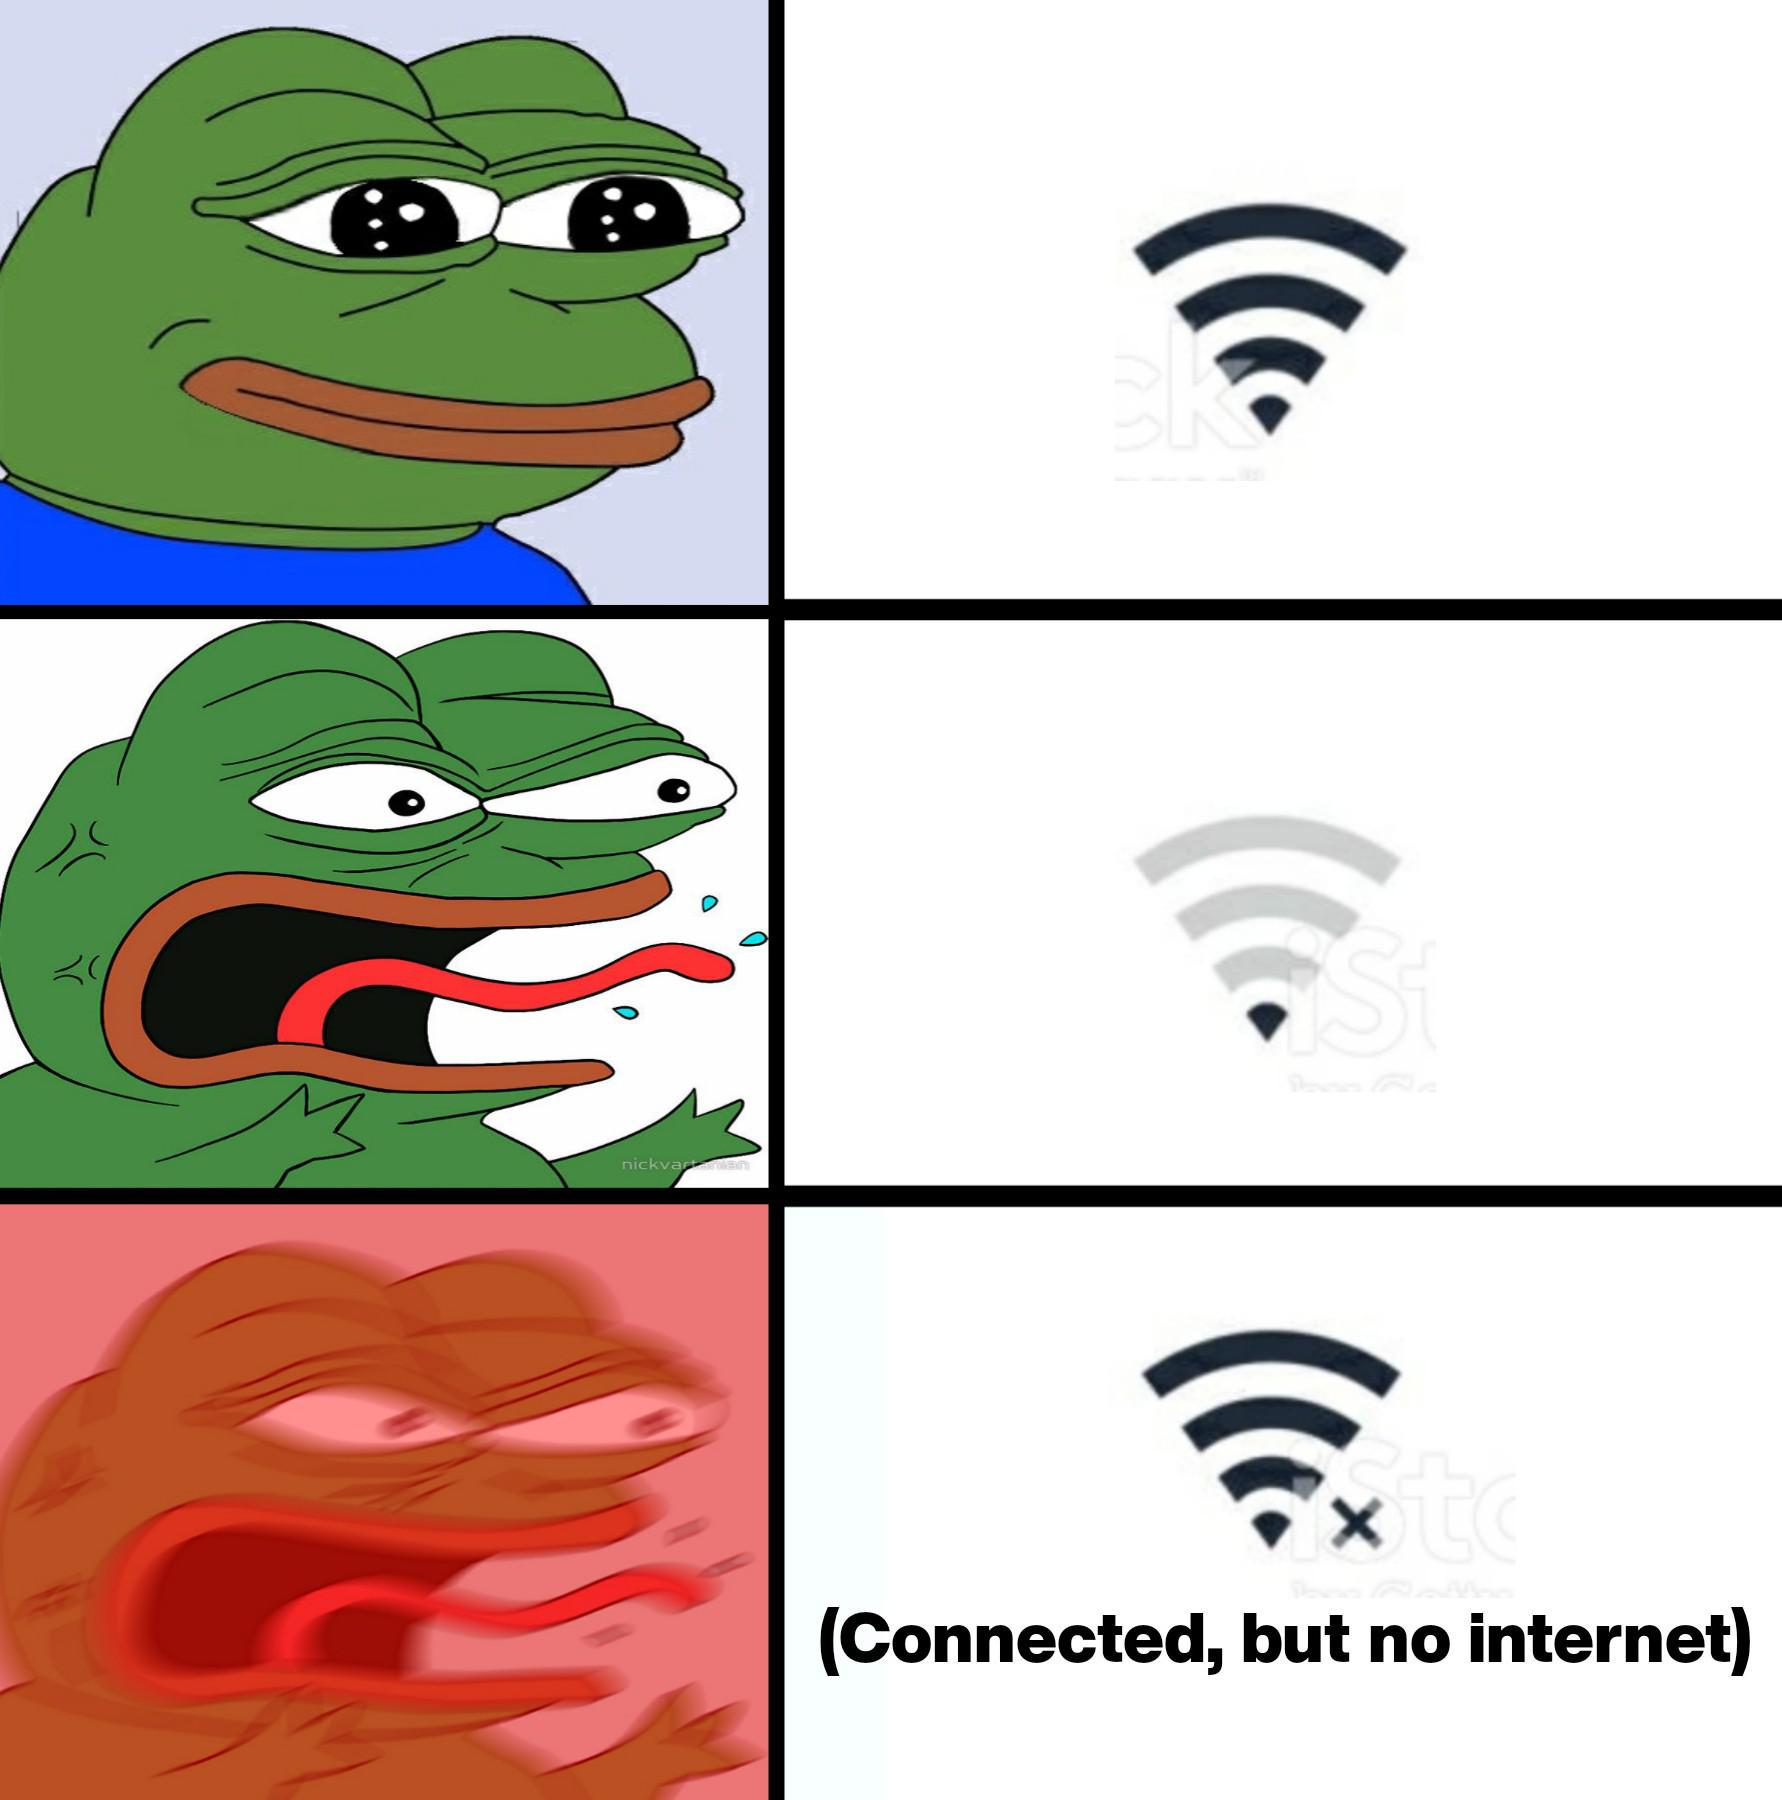 Internet meme - nickvart ac it Connected, but no internet